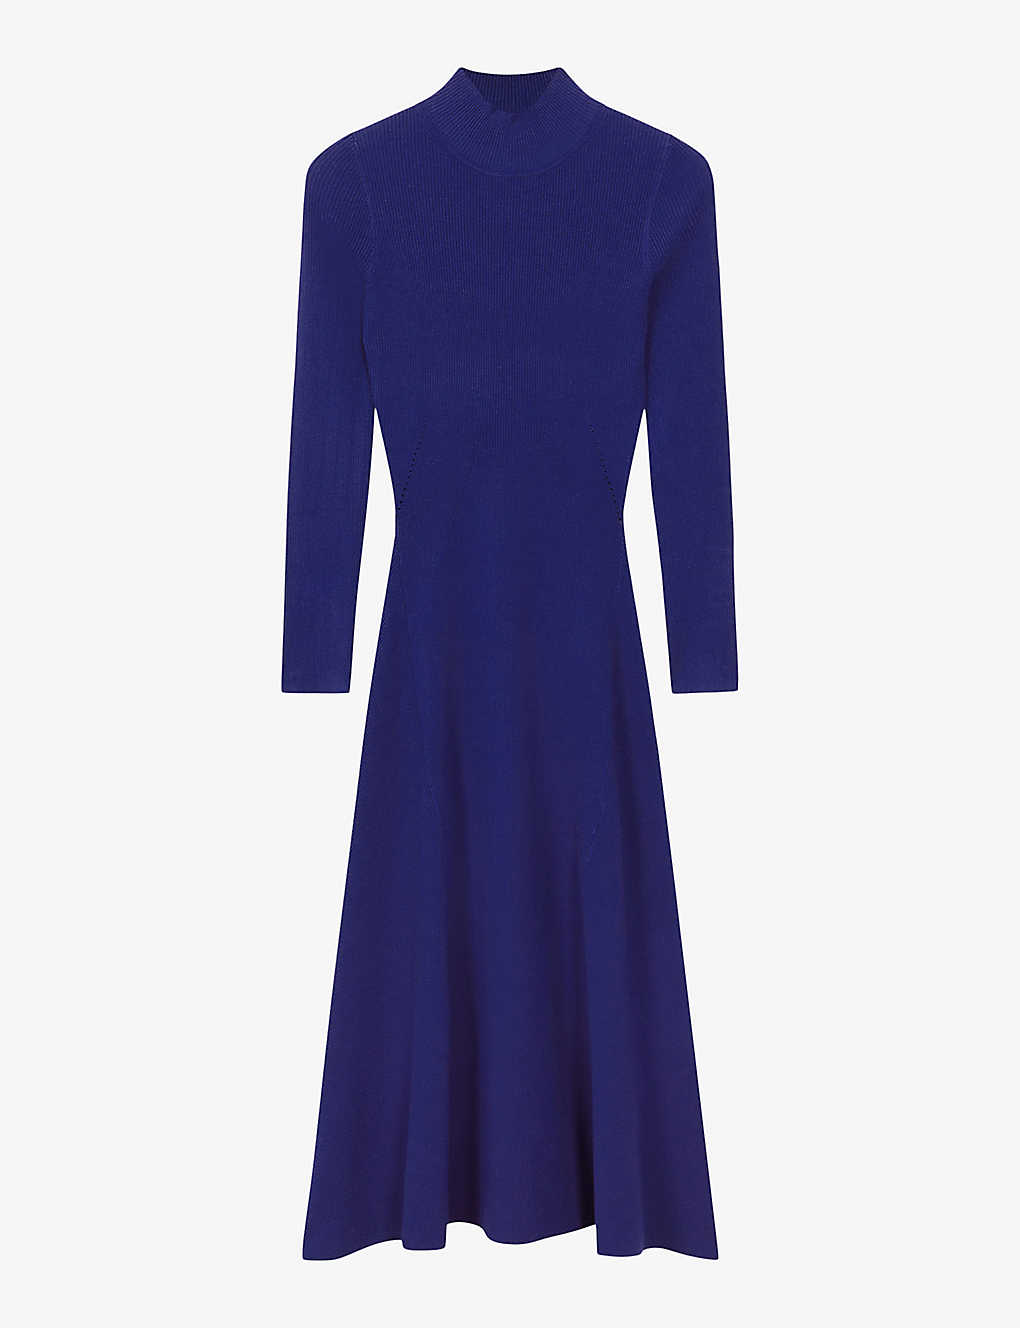 Reiss Chrissy - Blue Knitted Bodycon Midi Dress, L